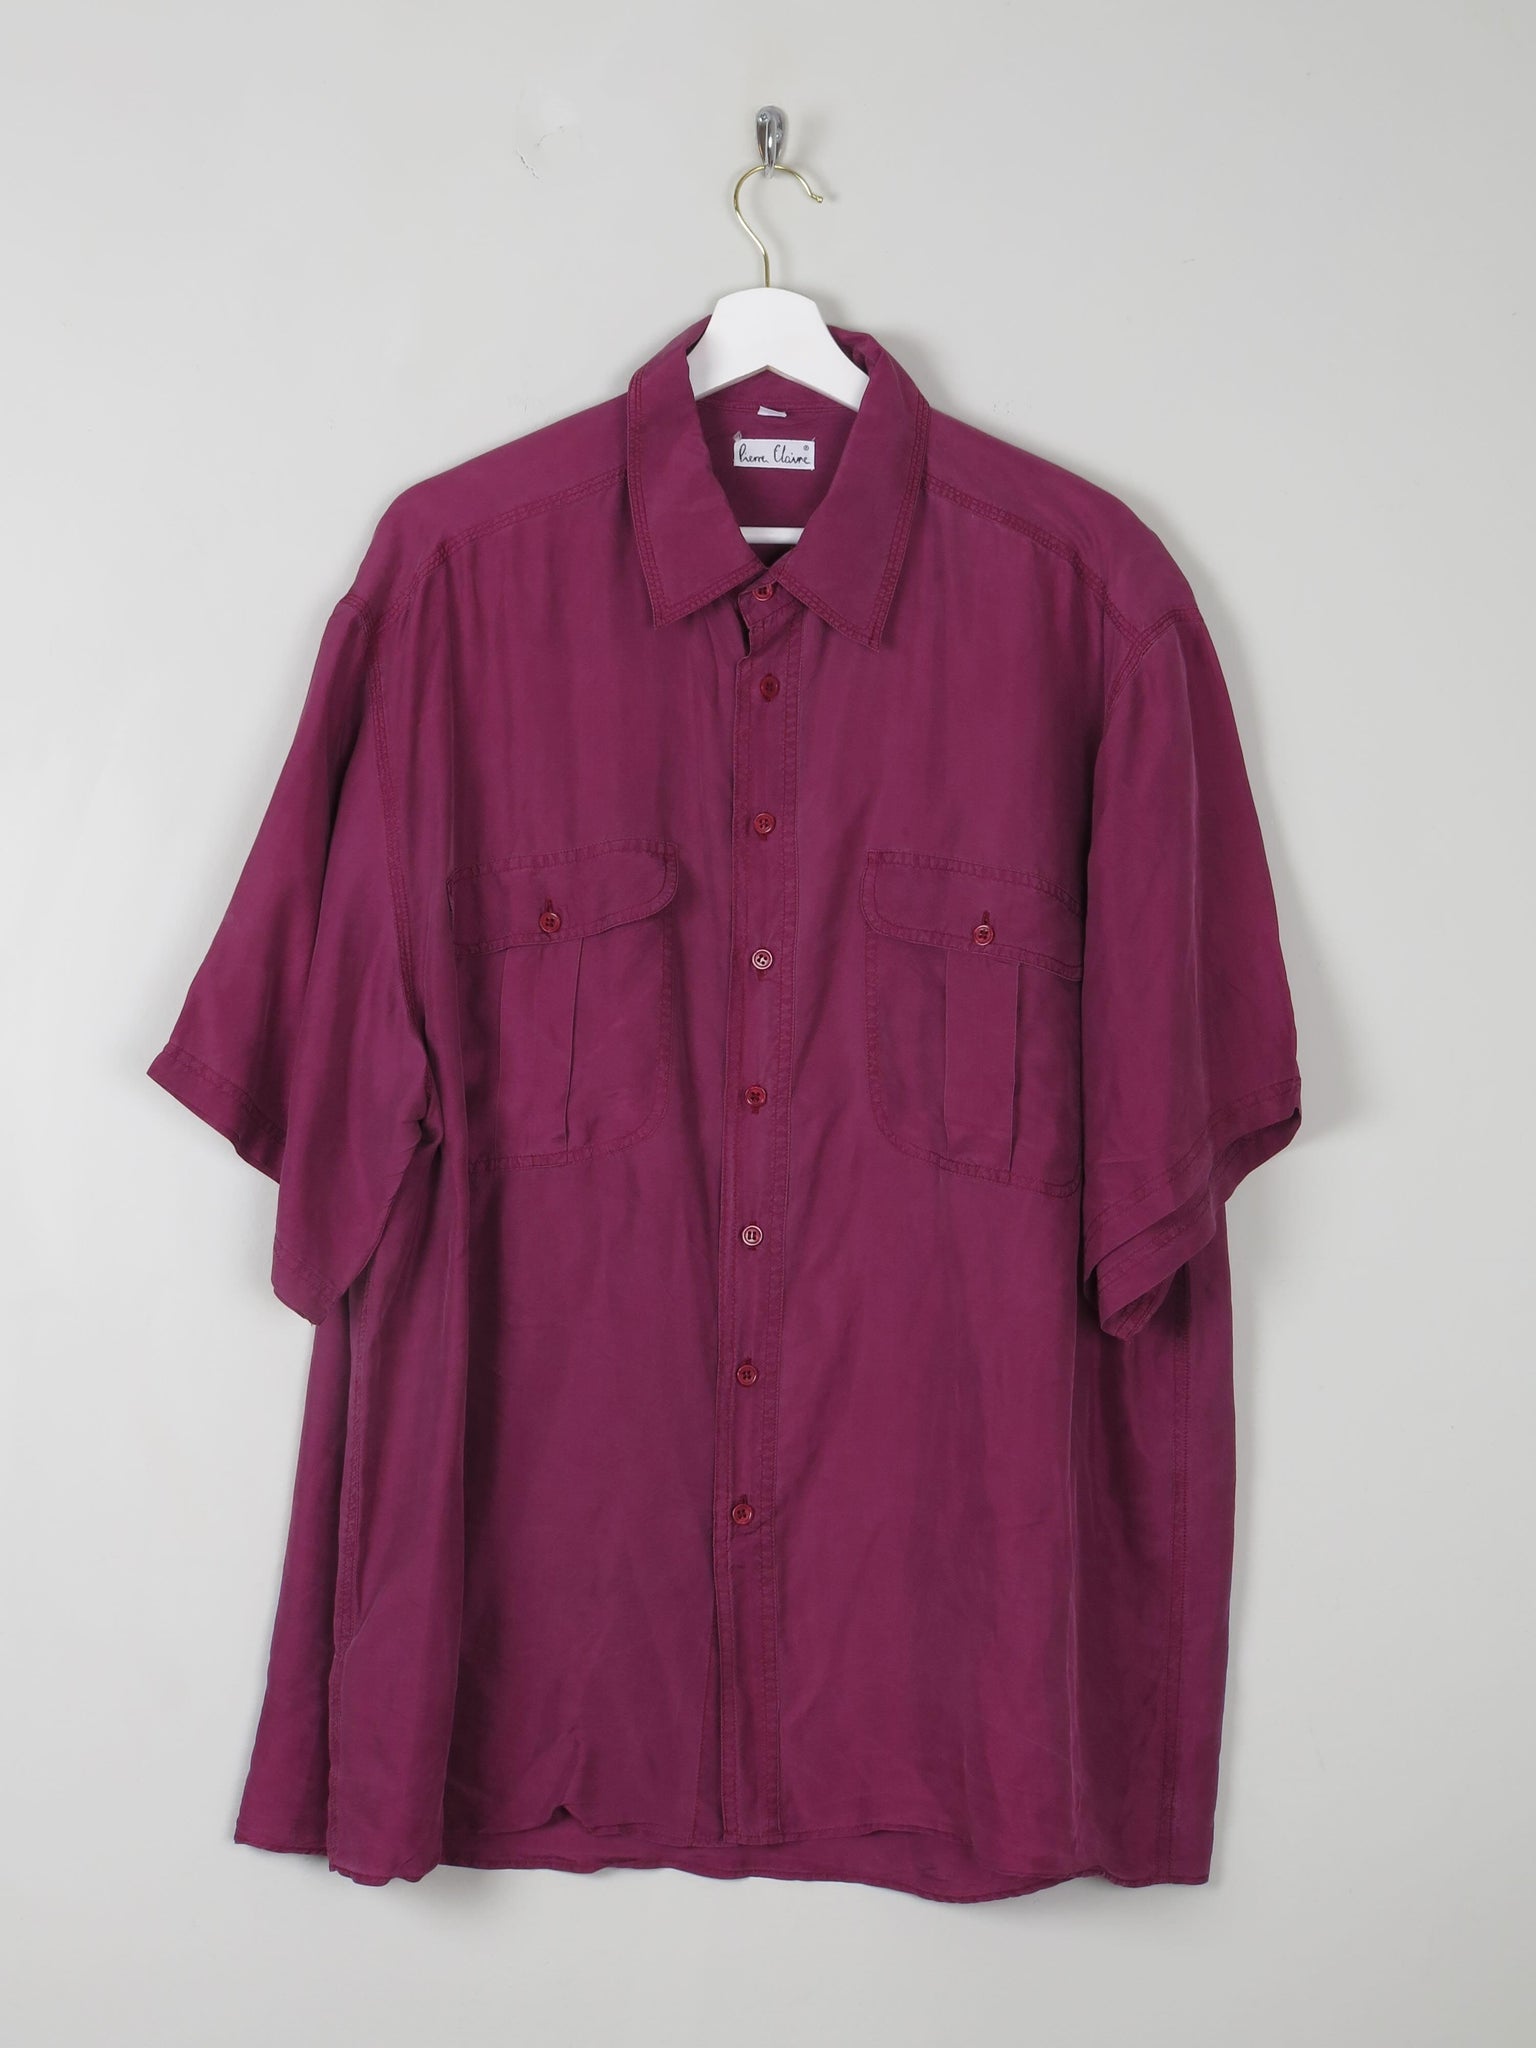 Men's Vintage Wine/Burgundy Silk Shirt L/XL - The Harlequin